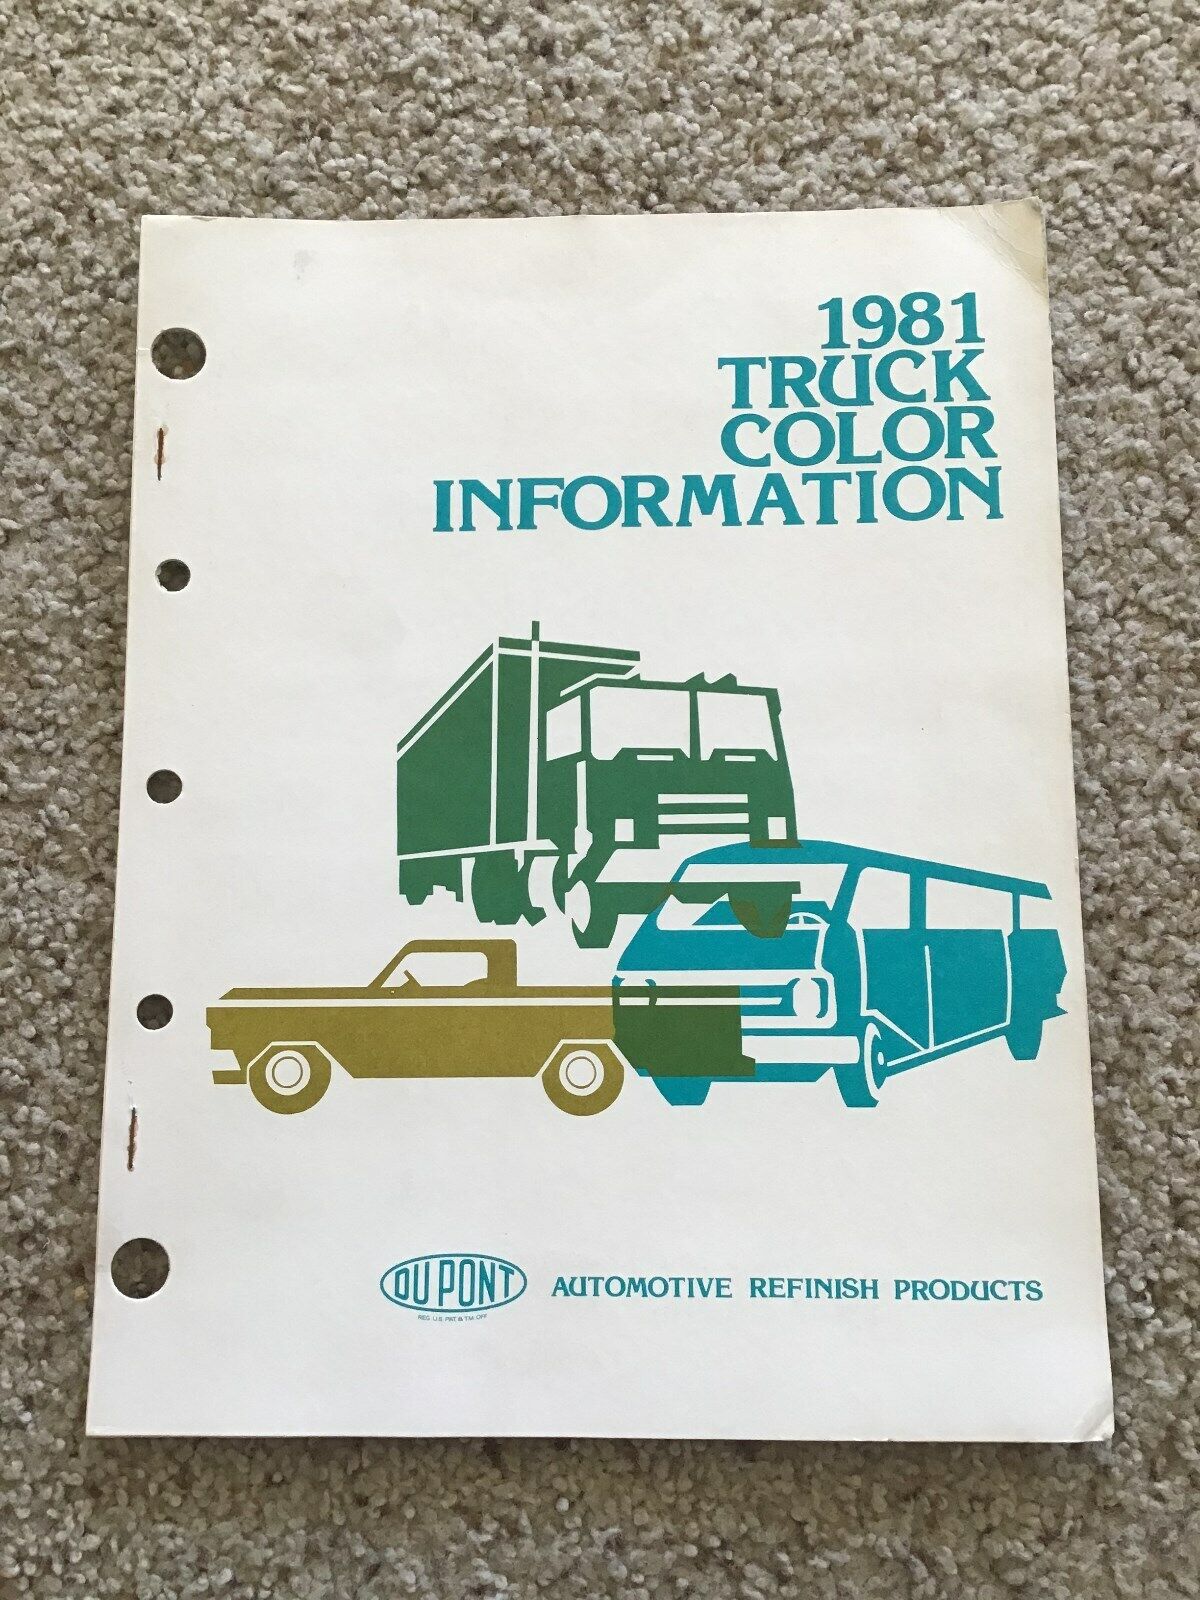 1981 Dupont truck color information catalogue.